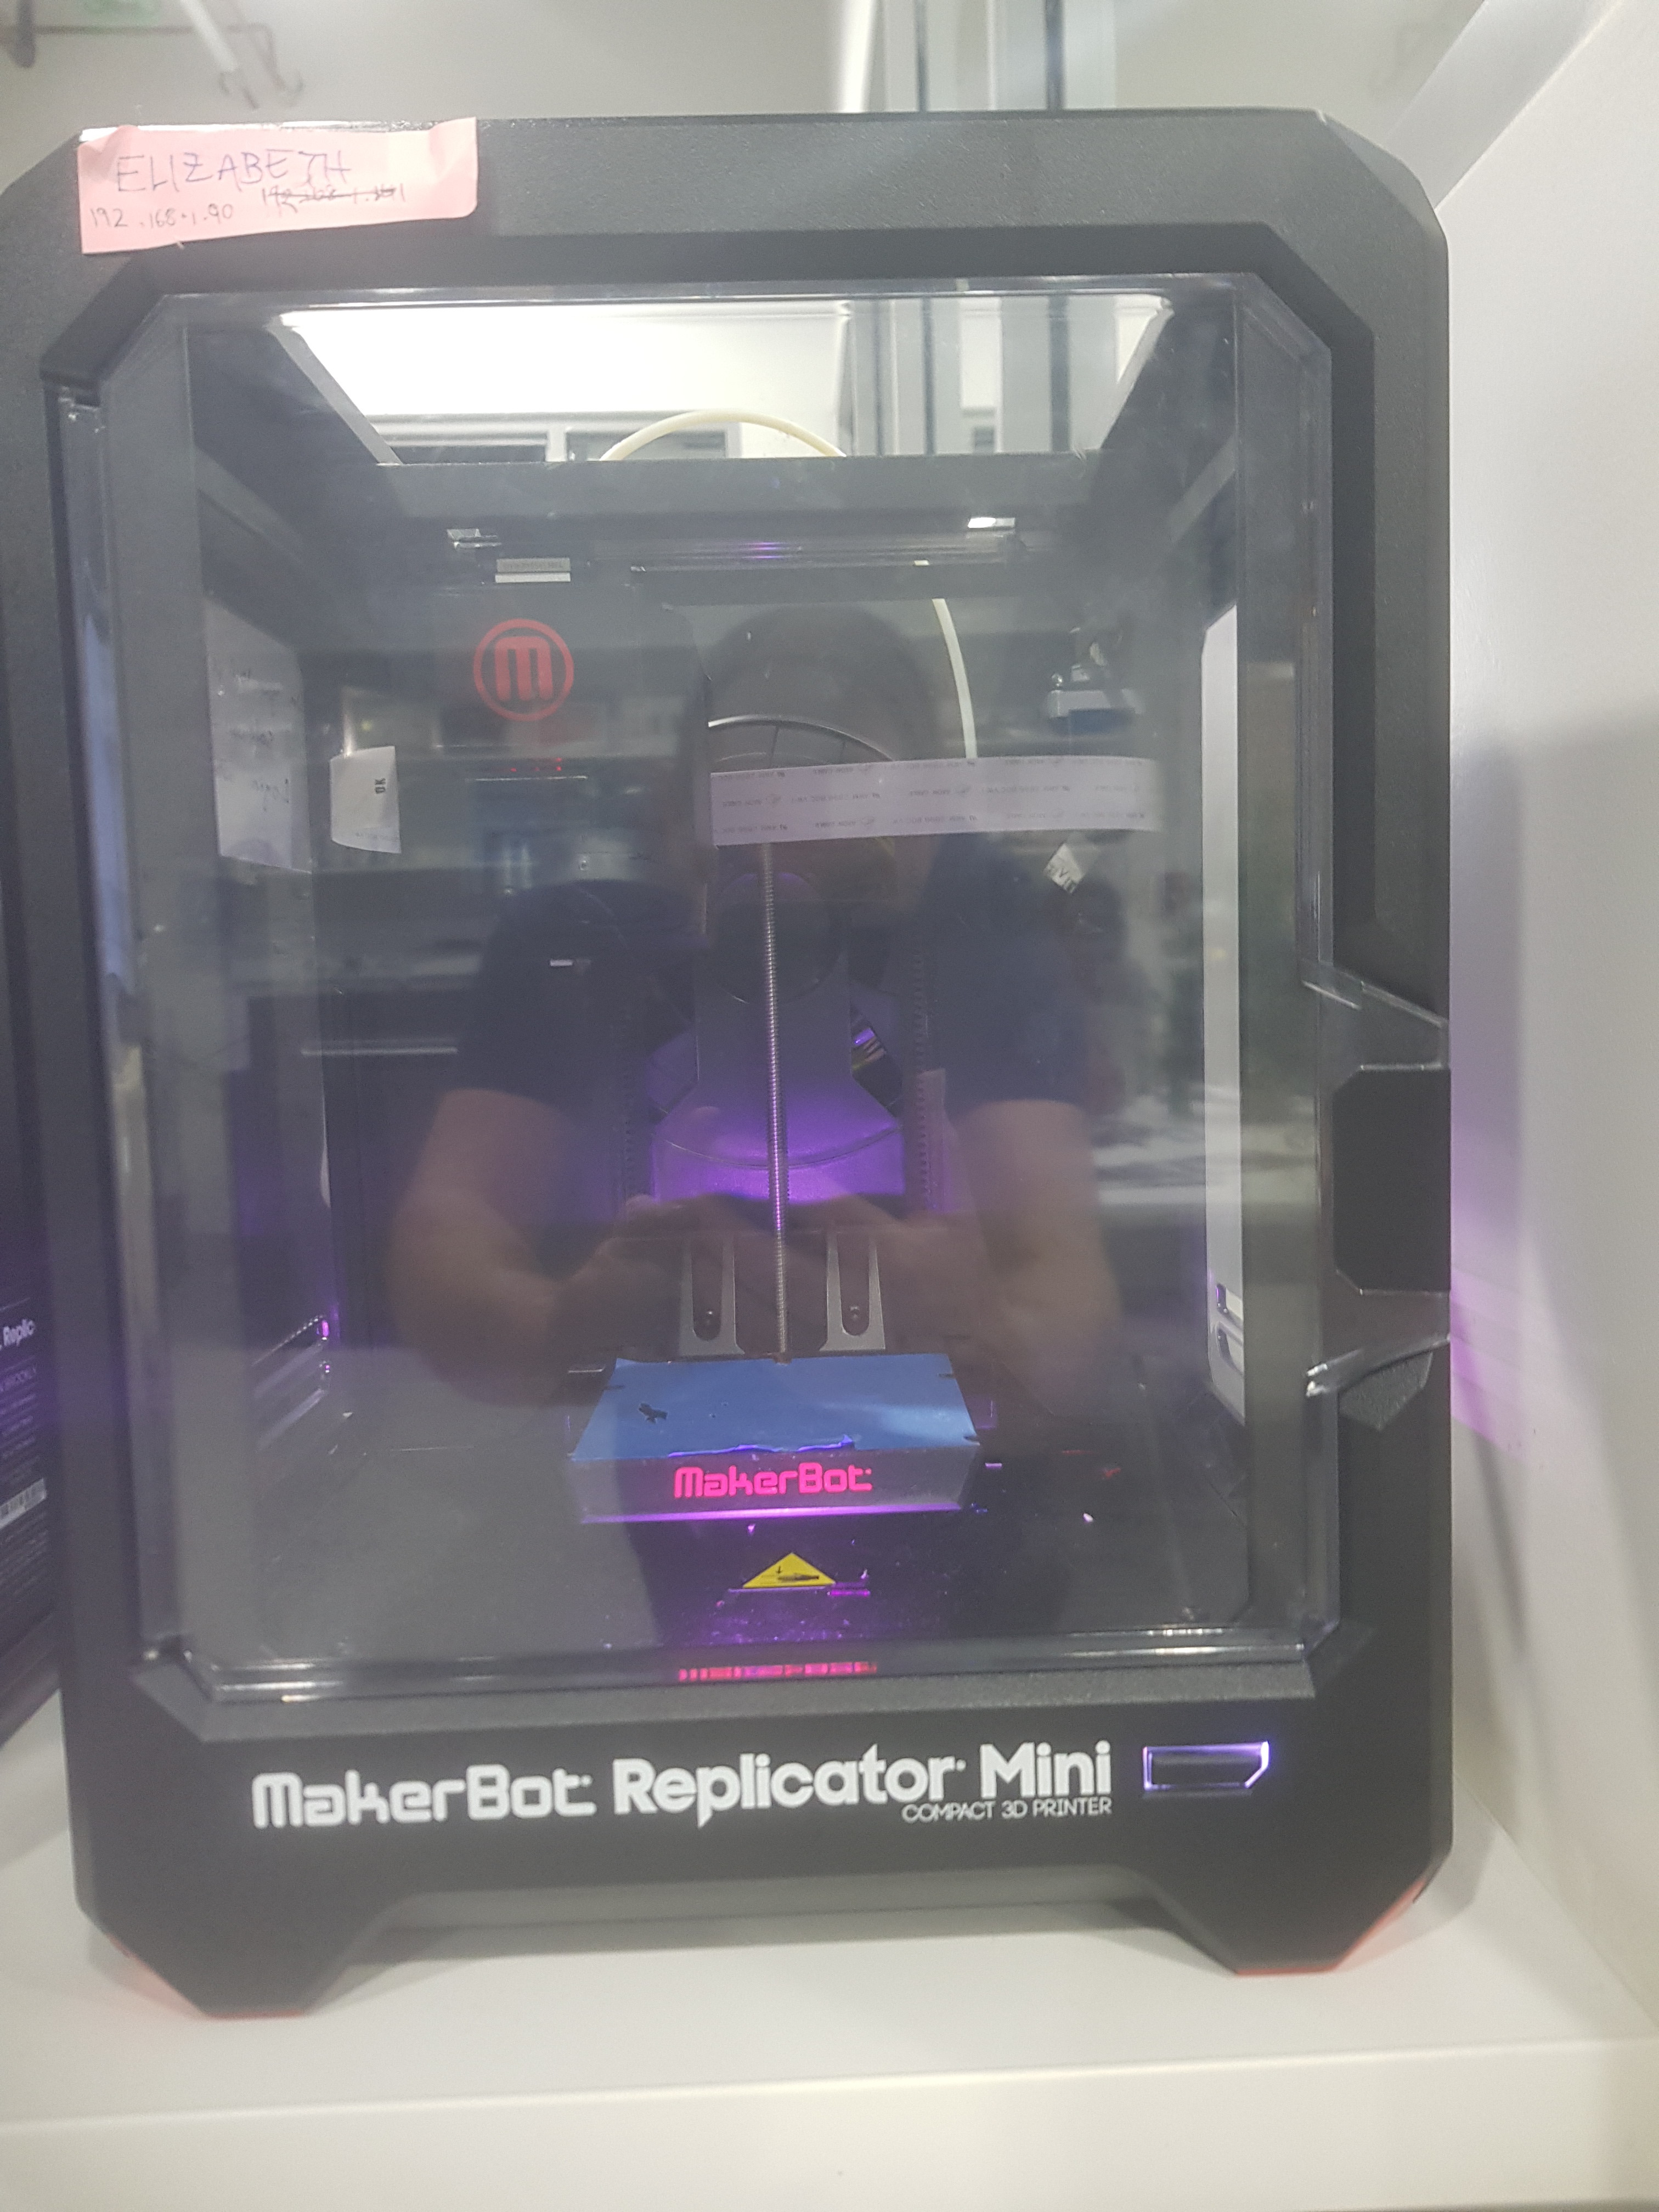 82 - G40 - Makerbot Replicator Mini_Elizabeth